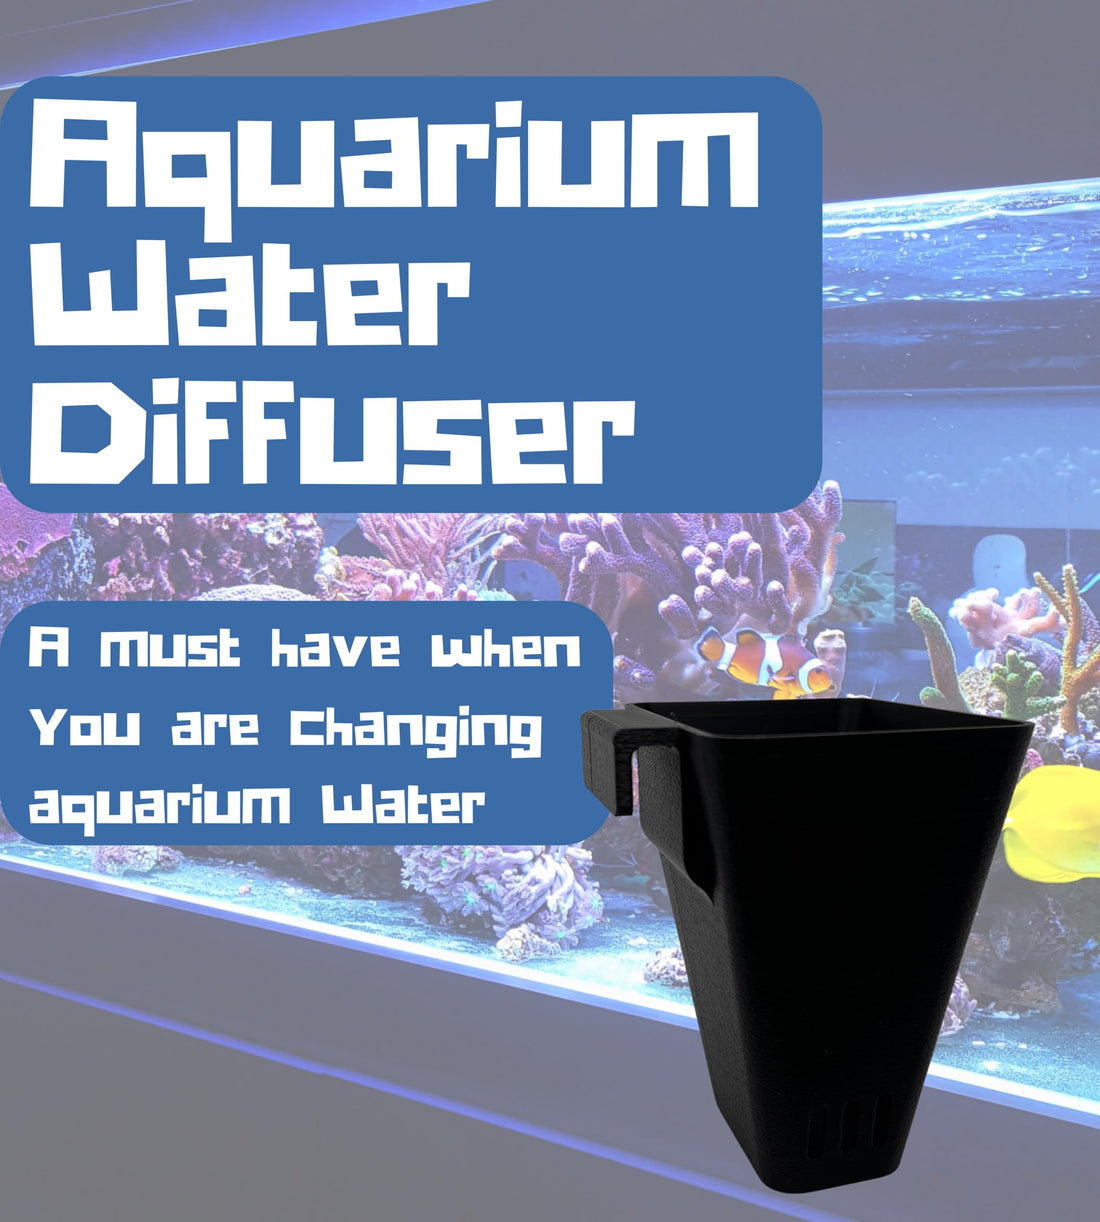 Chatelet REEFSHAPE Aquarium Water Diffuser Funnel | Reduce Turbulence Filling Up Aquarium Tanks | Made in USA